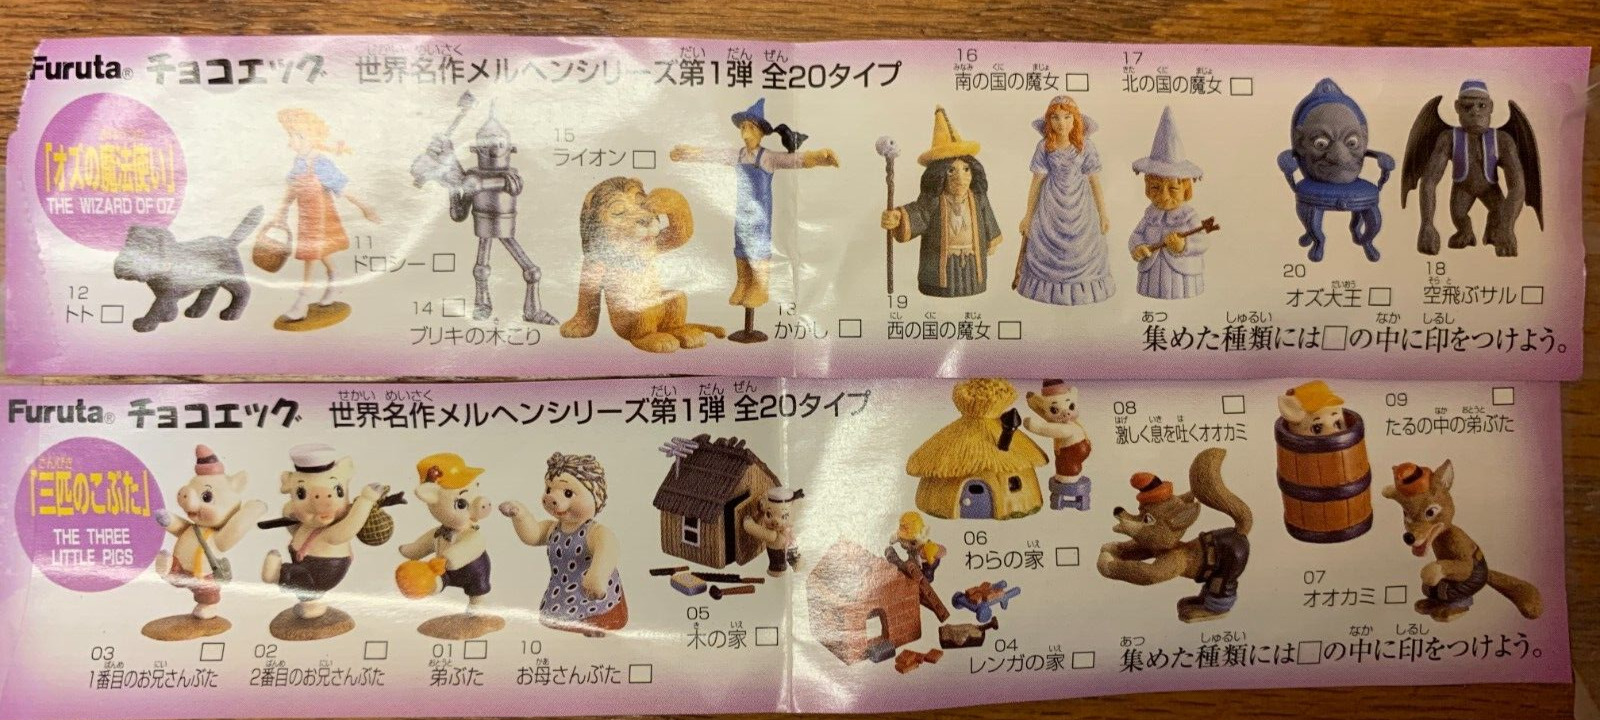 Furuta Japan World Masterpiece Fairy Tales Collection 1 Set of 20 mini figures